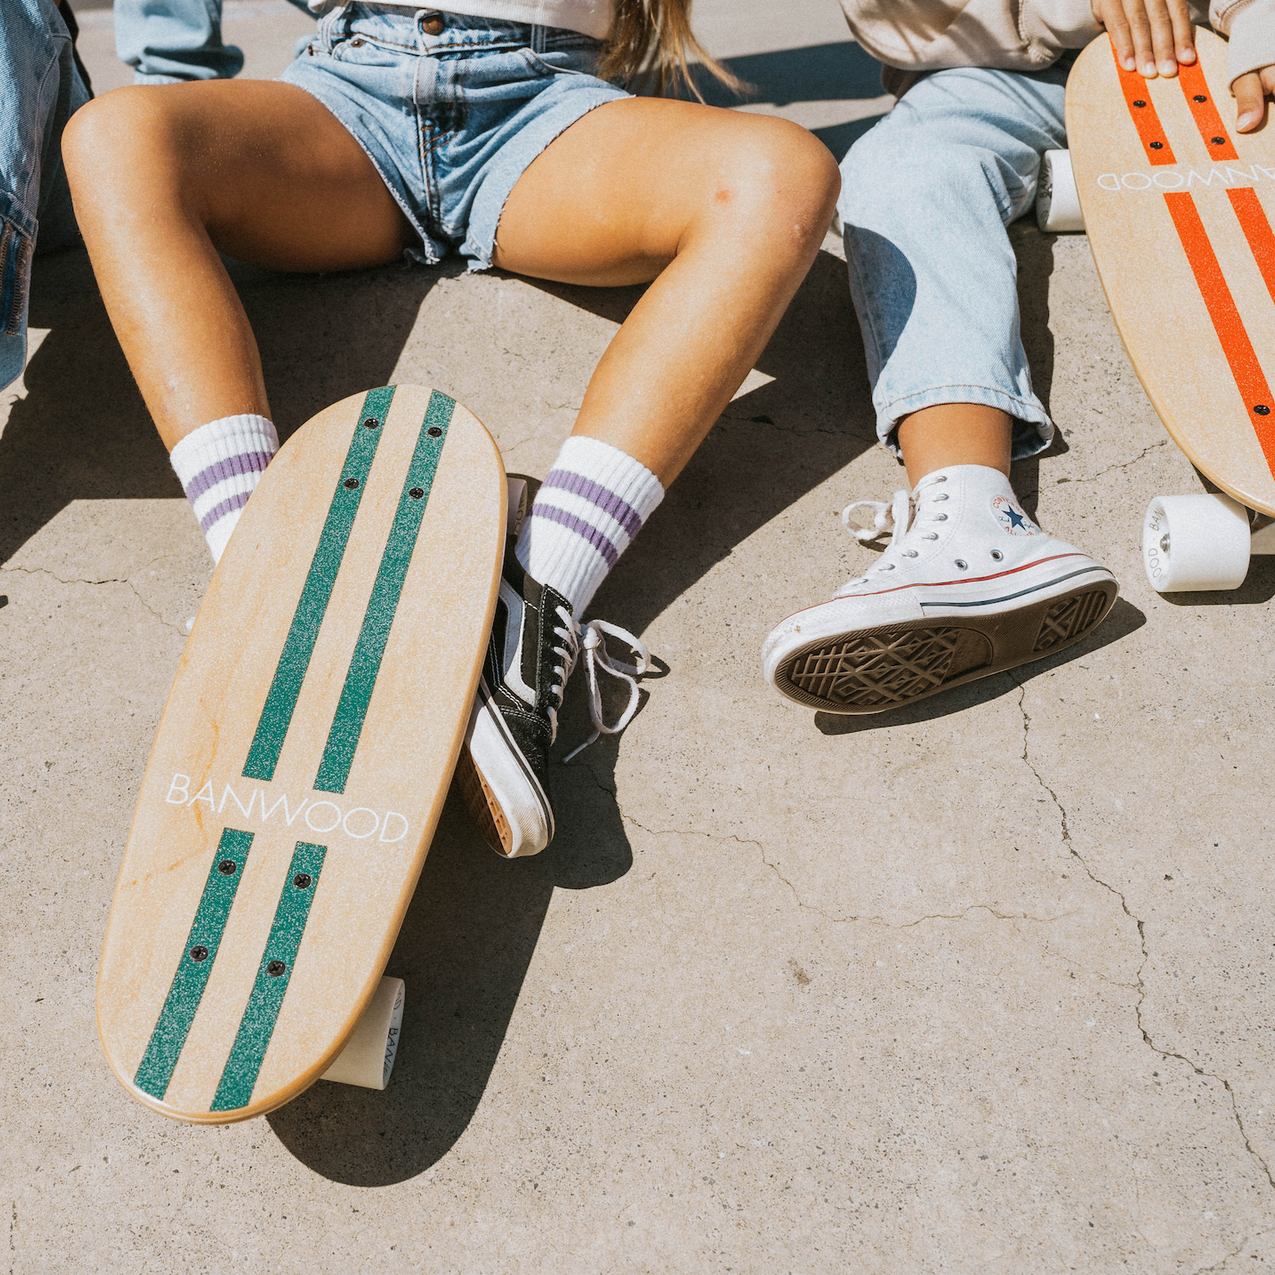 Banwood: Green skateboard